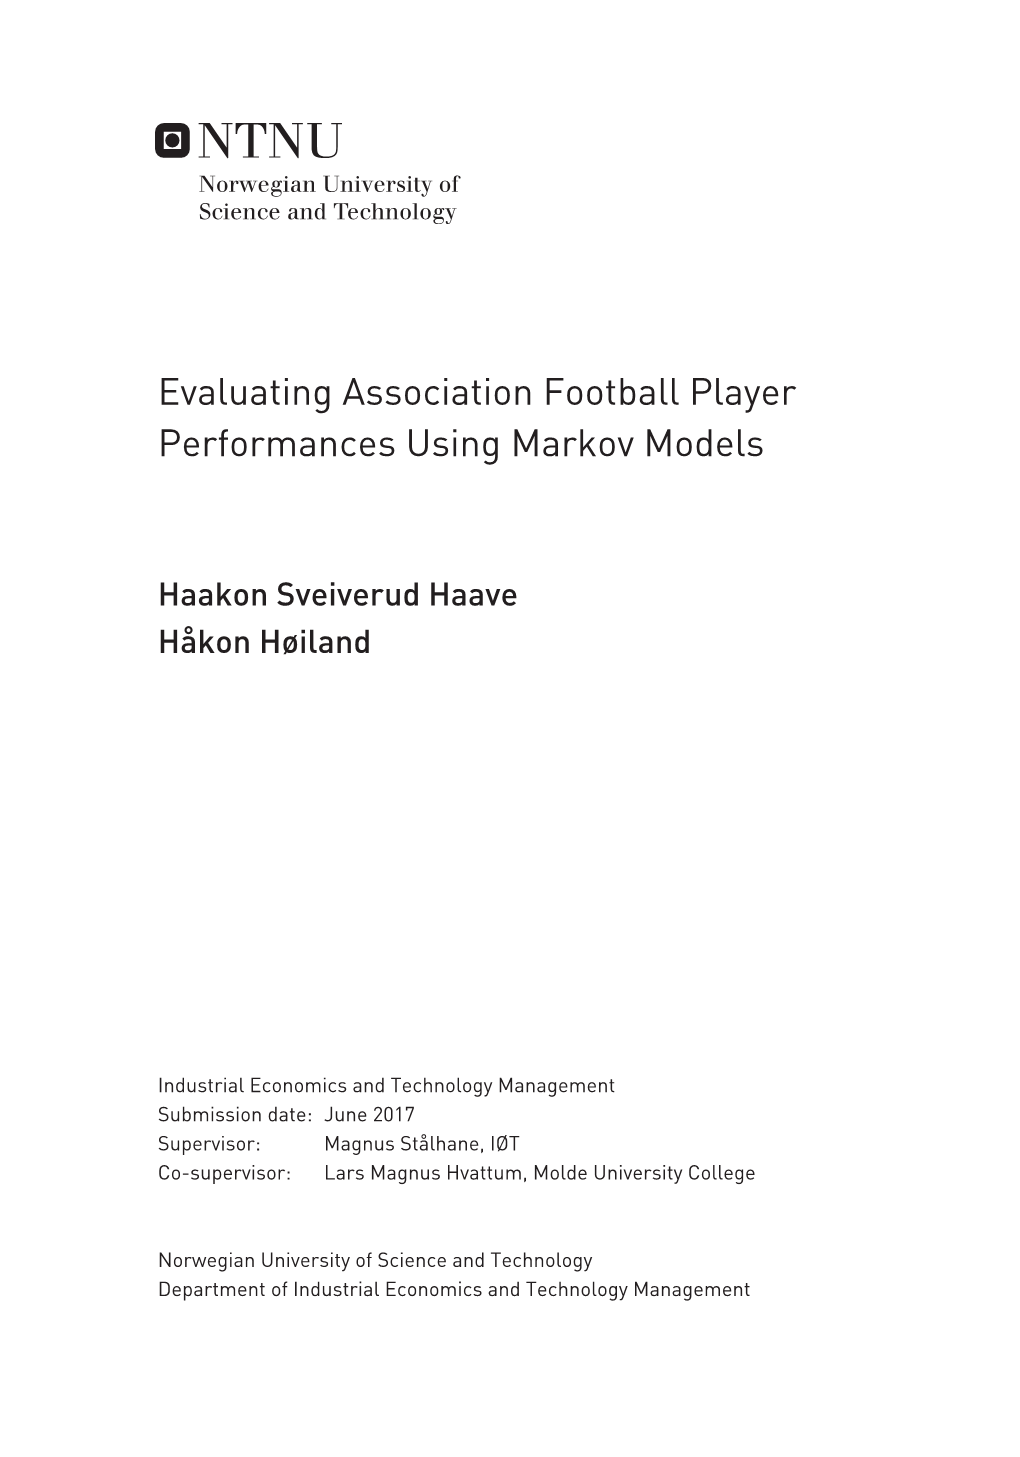 Evaluating Association Football Player Performances Using Markov Models